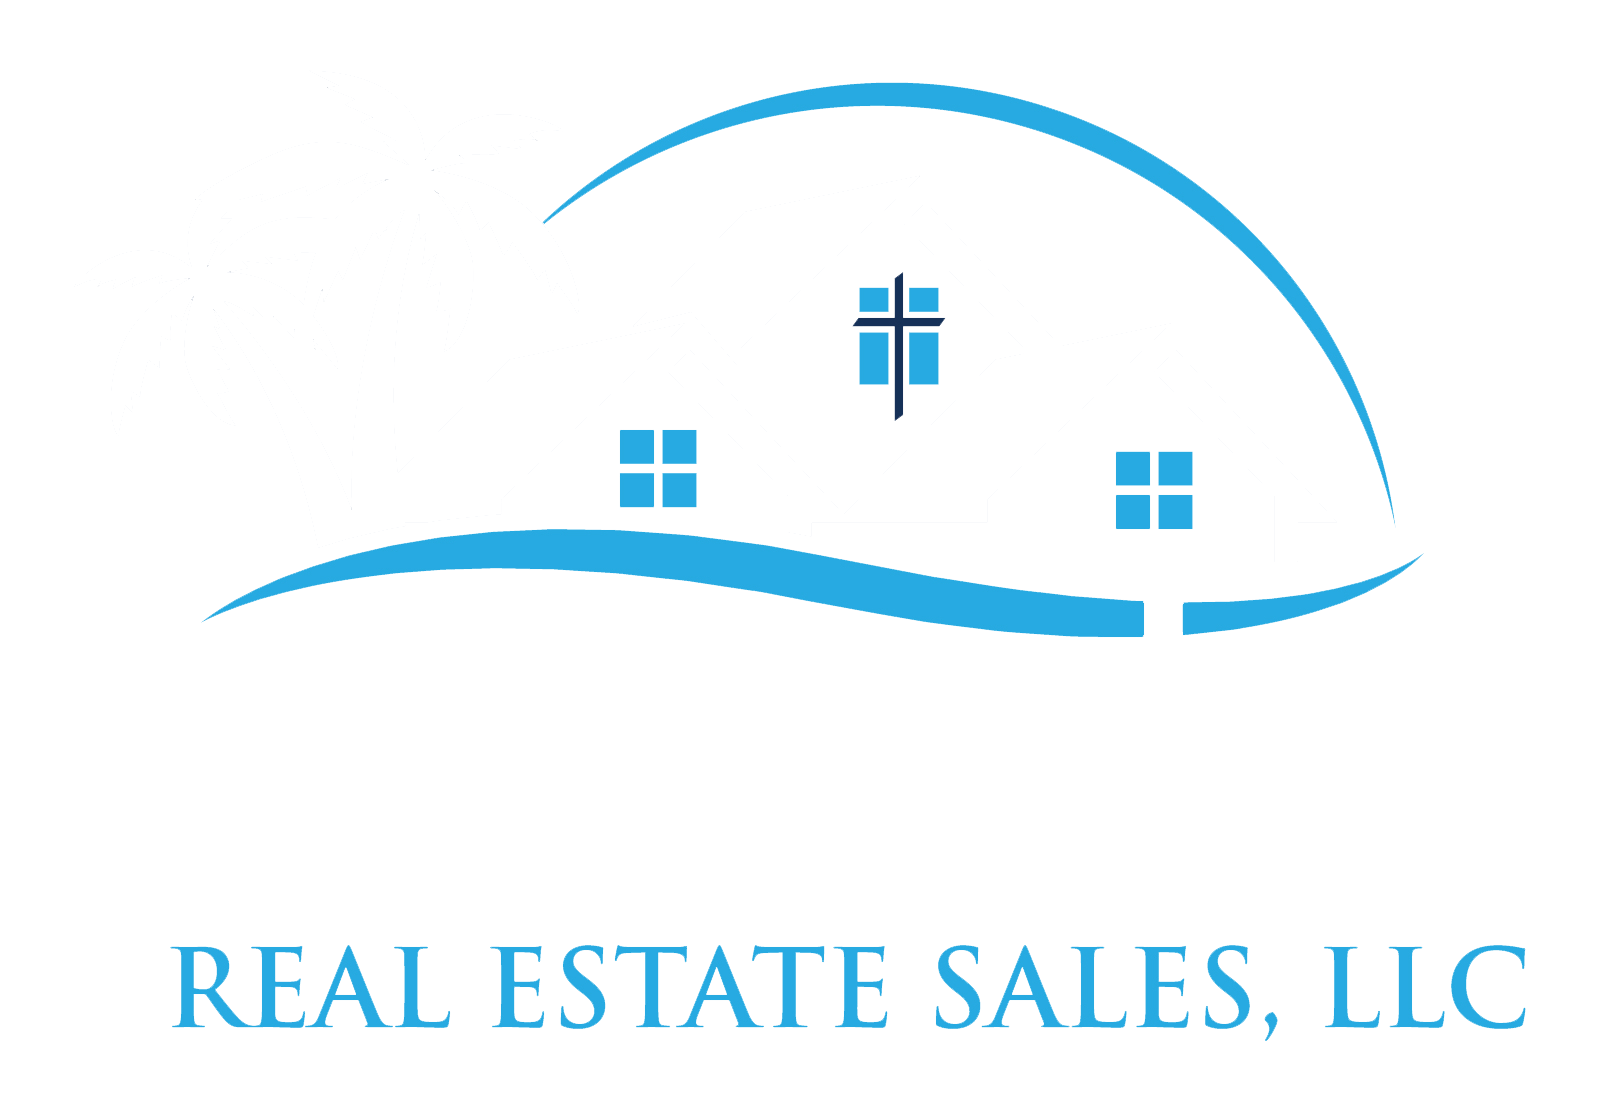 Trinity Real Estate Sales, LLC.